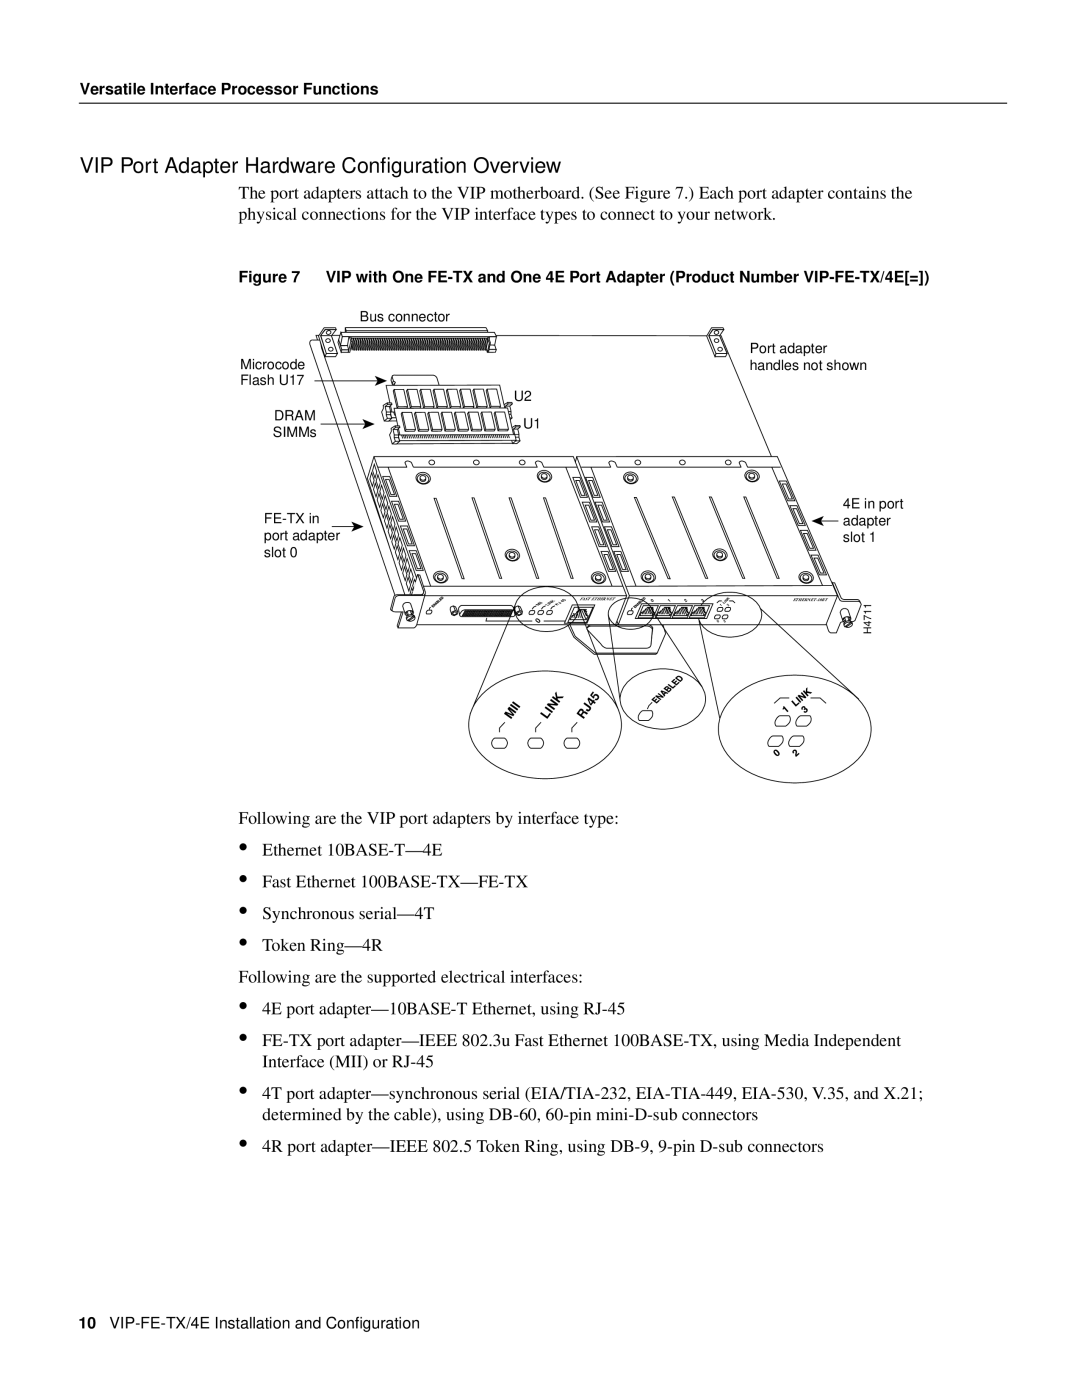 Cisco Systems VIP-FE-TX/4E manual VIP Port Adapter Hardware Conﬁguration Overview 